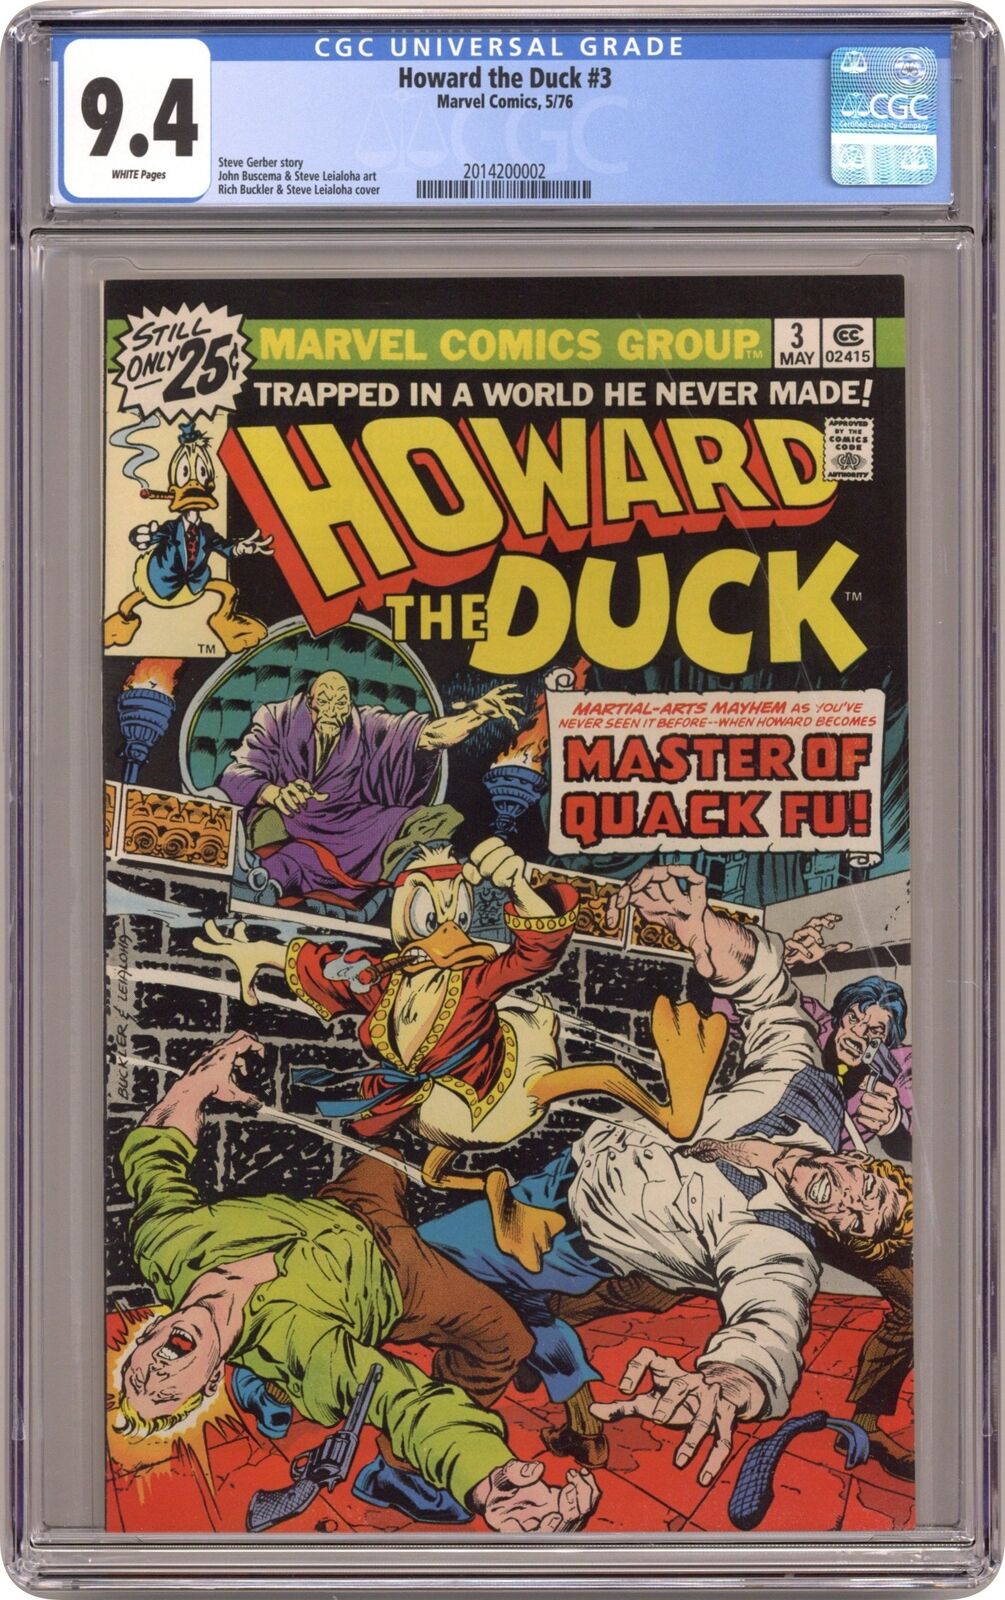 Howard the Duck #3 CGC 9.4 1976 2014200002